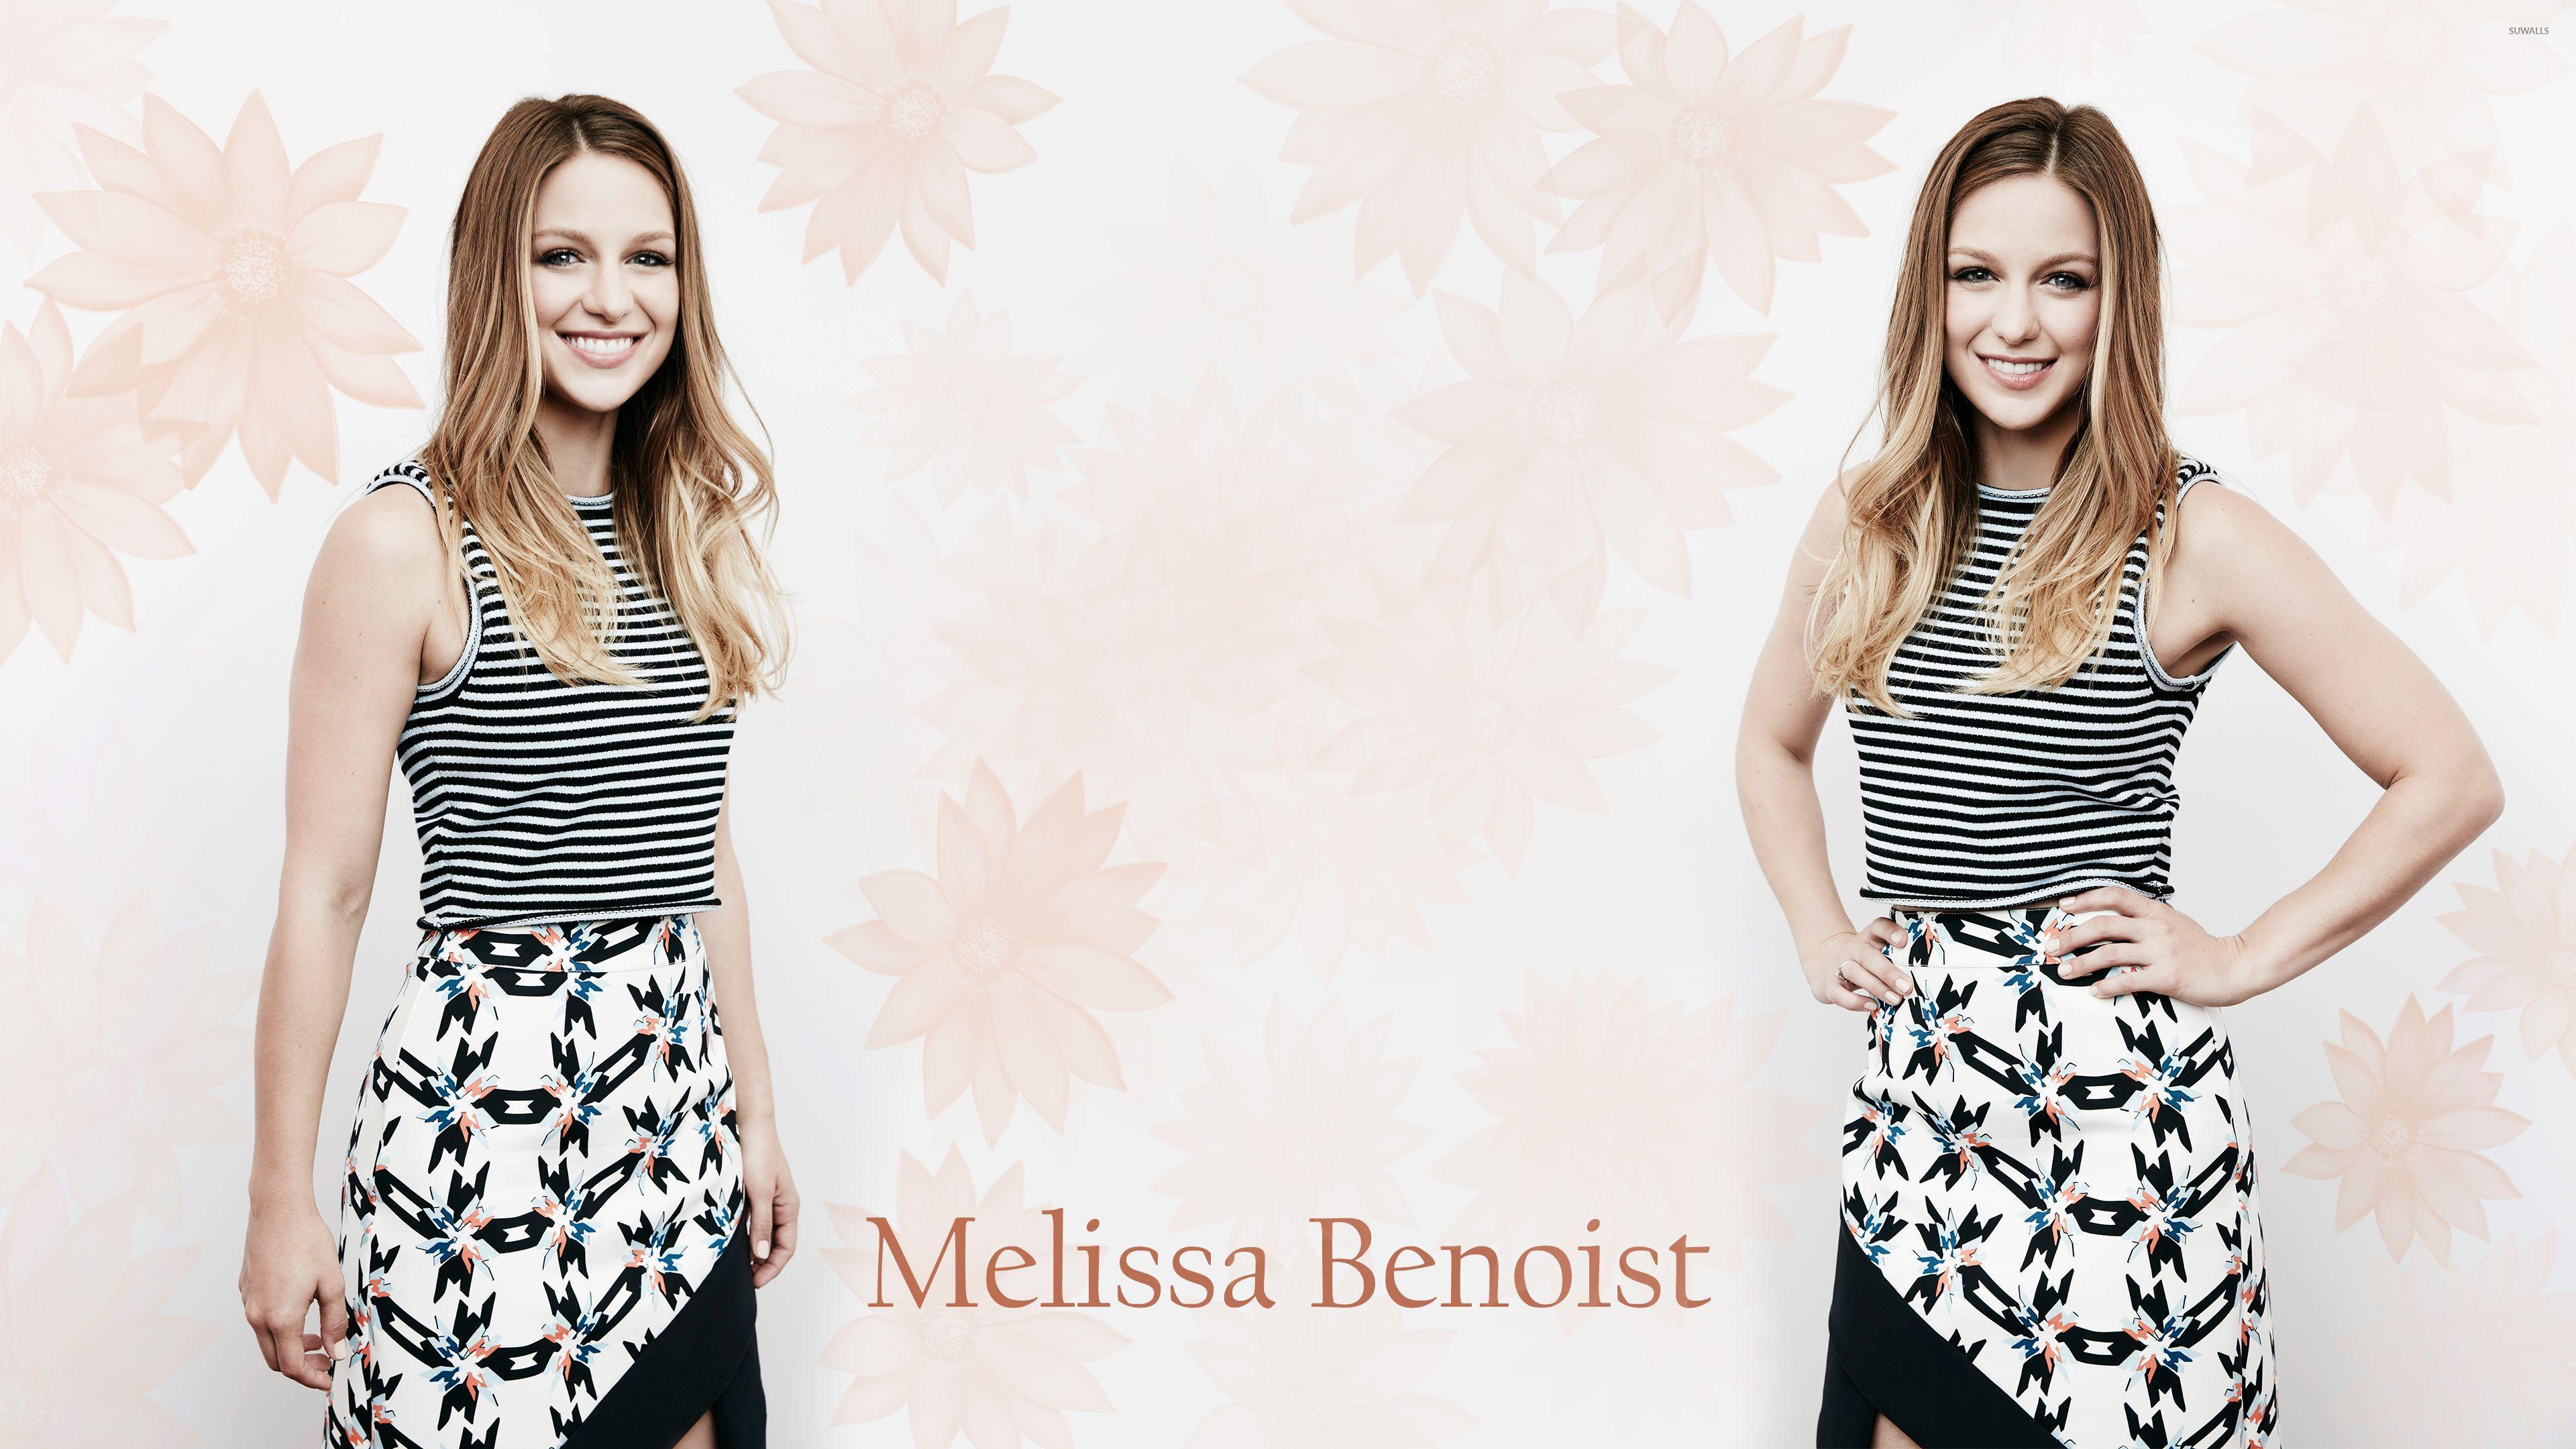 Melissa Benoist in a striped top wallpaper wallpaper